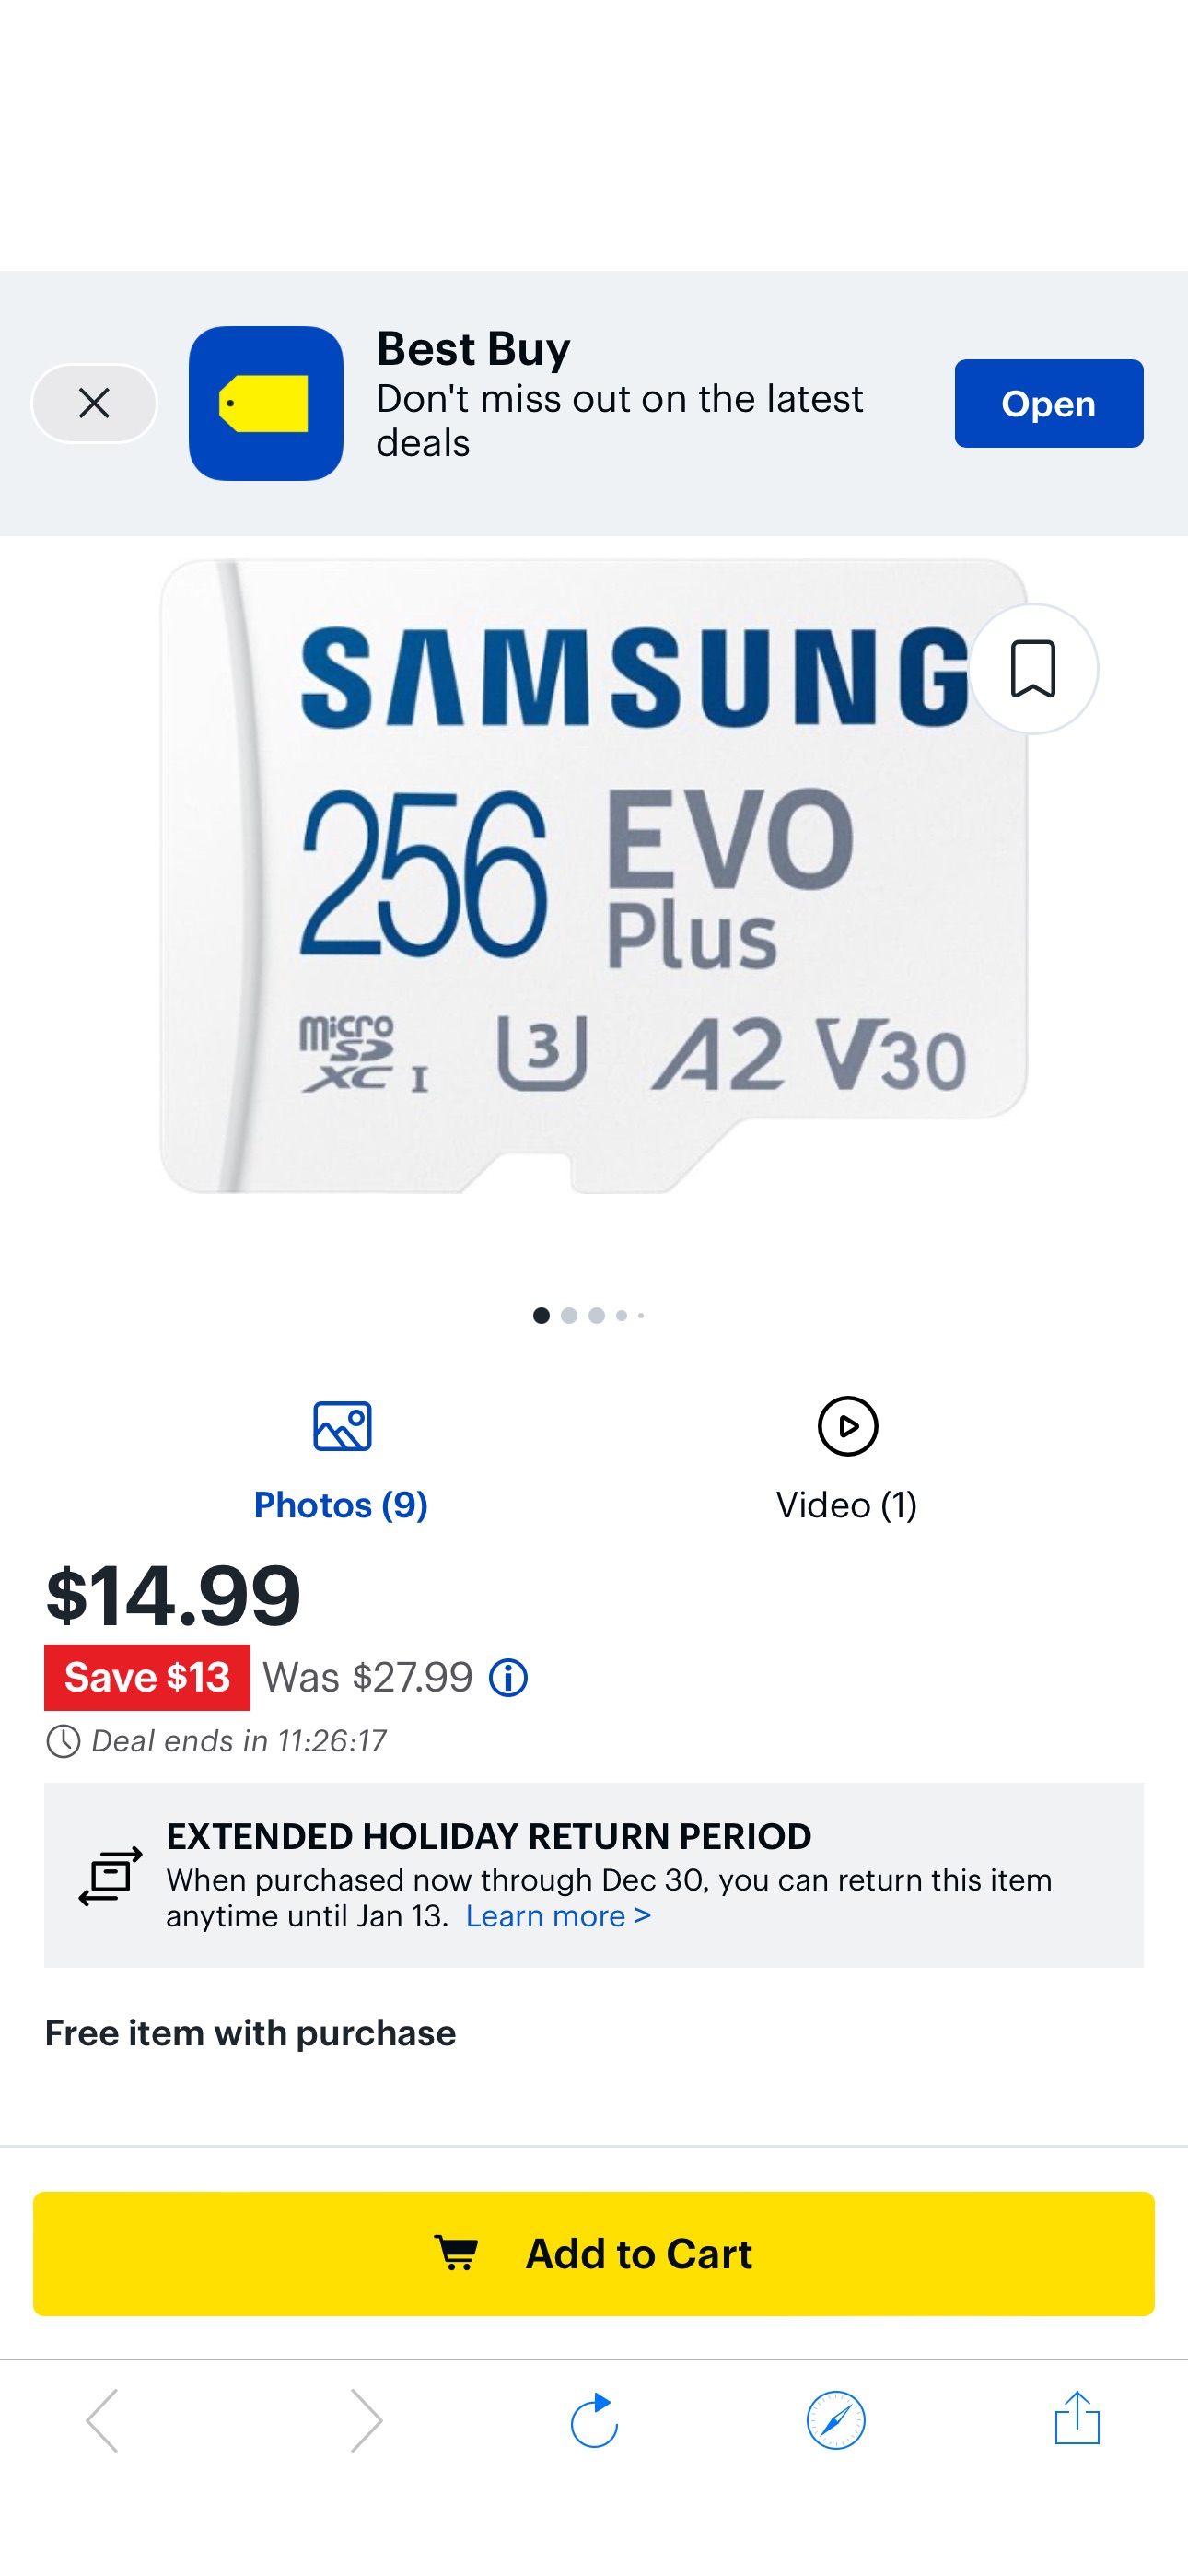 Samsung EVO Plus 256GB microSDXC UHS-I Memory Card with Adapter MB-MC256KA/AM - Best Buy